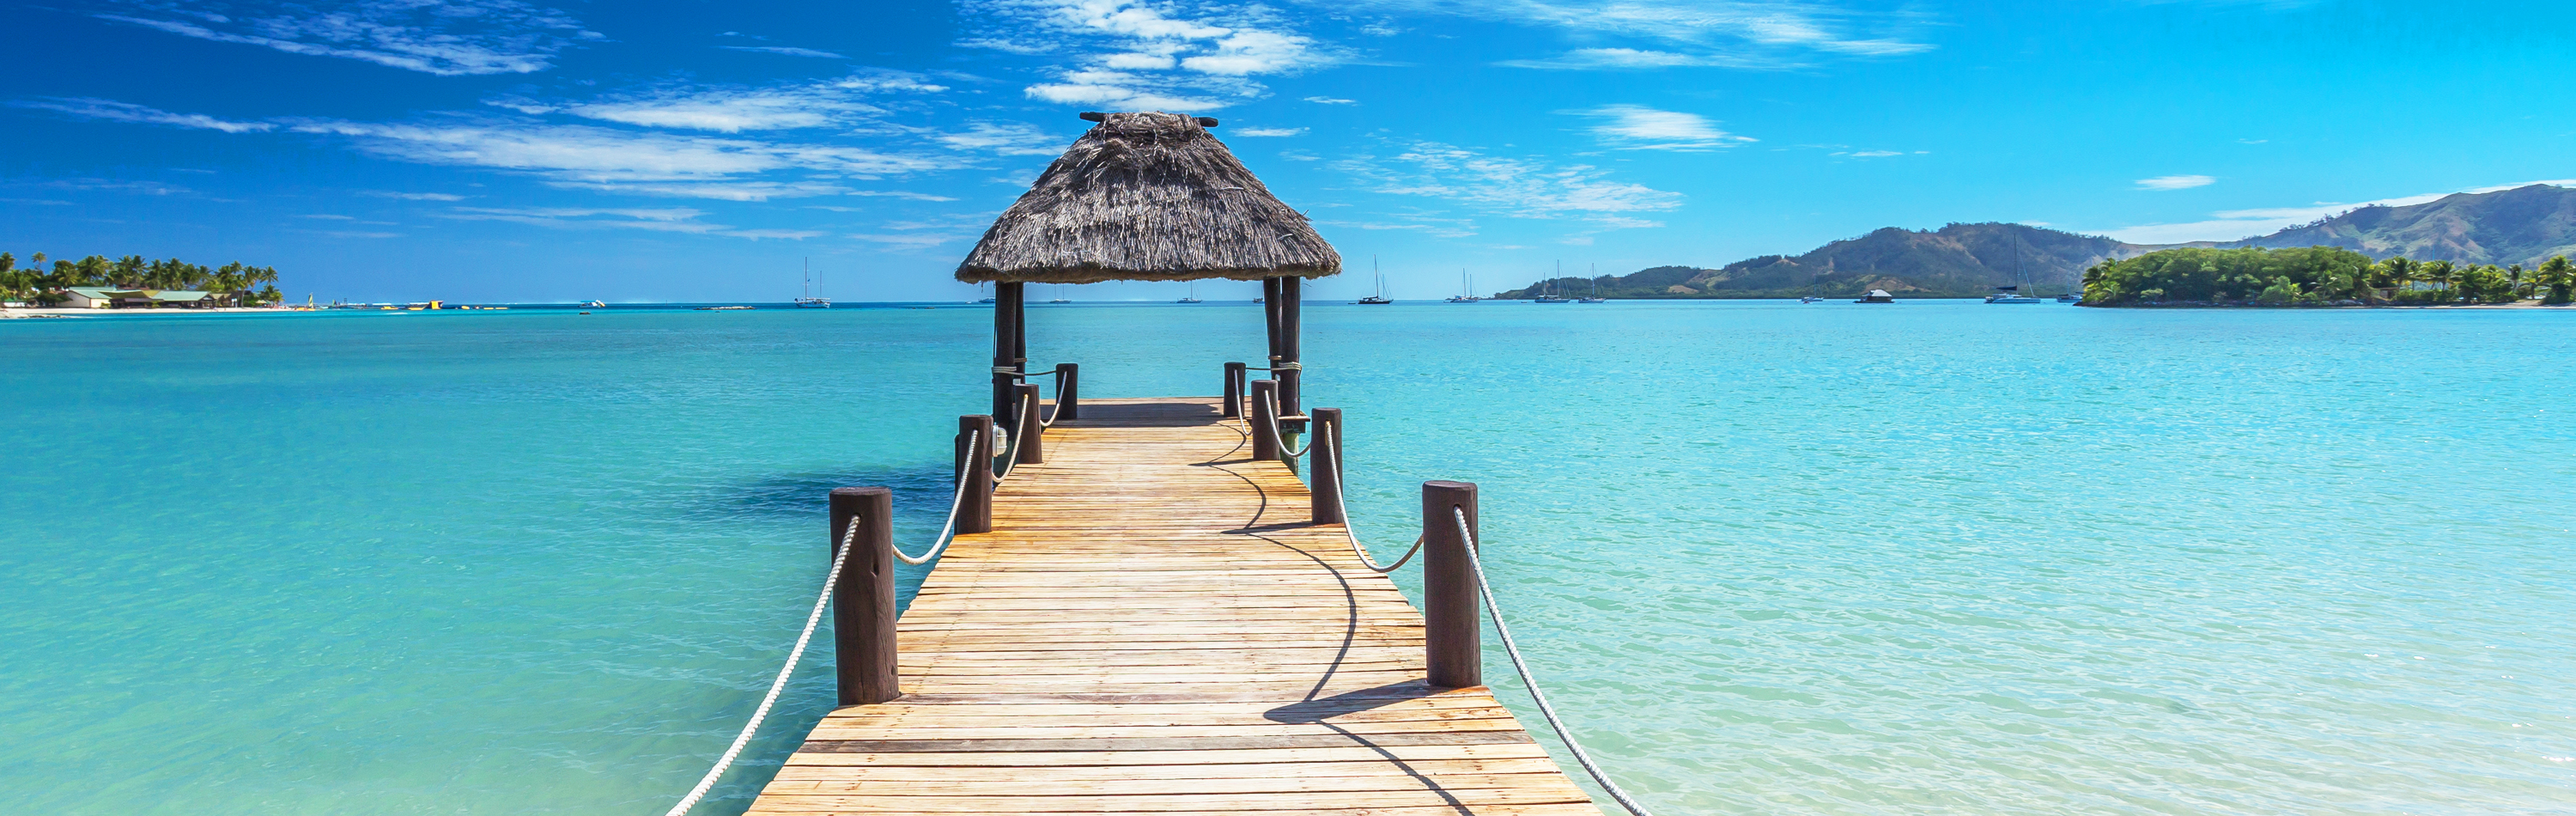 Best Fiji Honeymoon Vacations & Tours 20202021